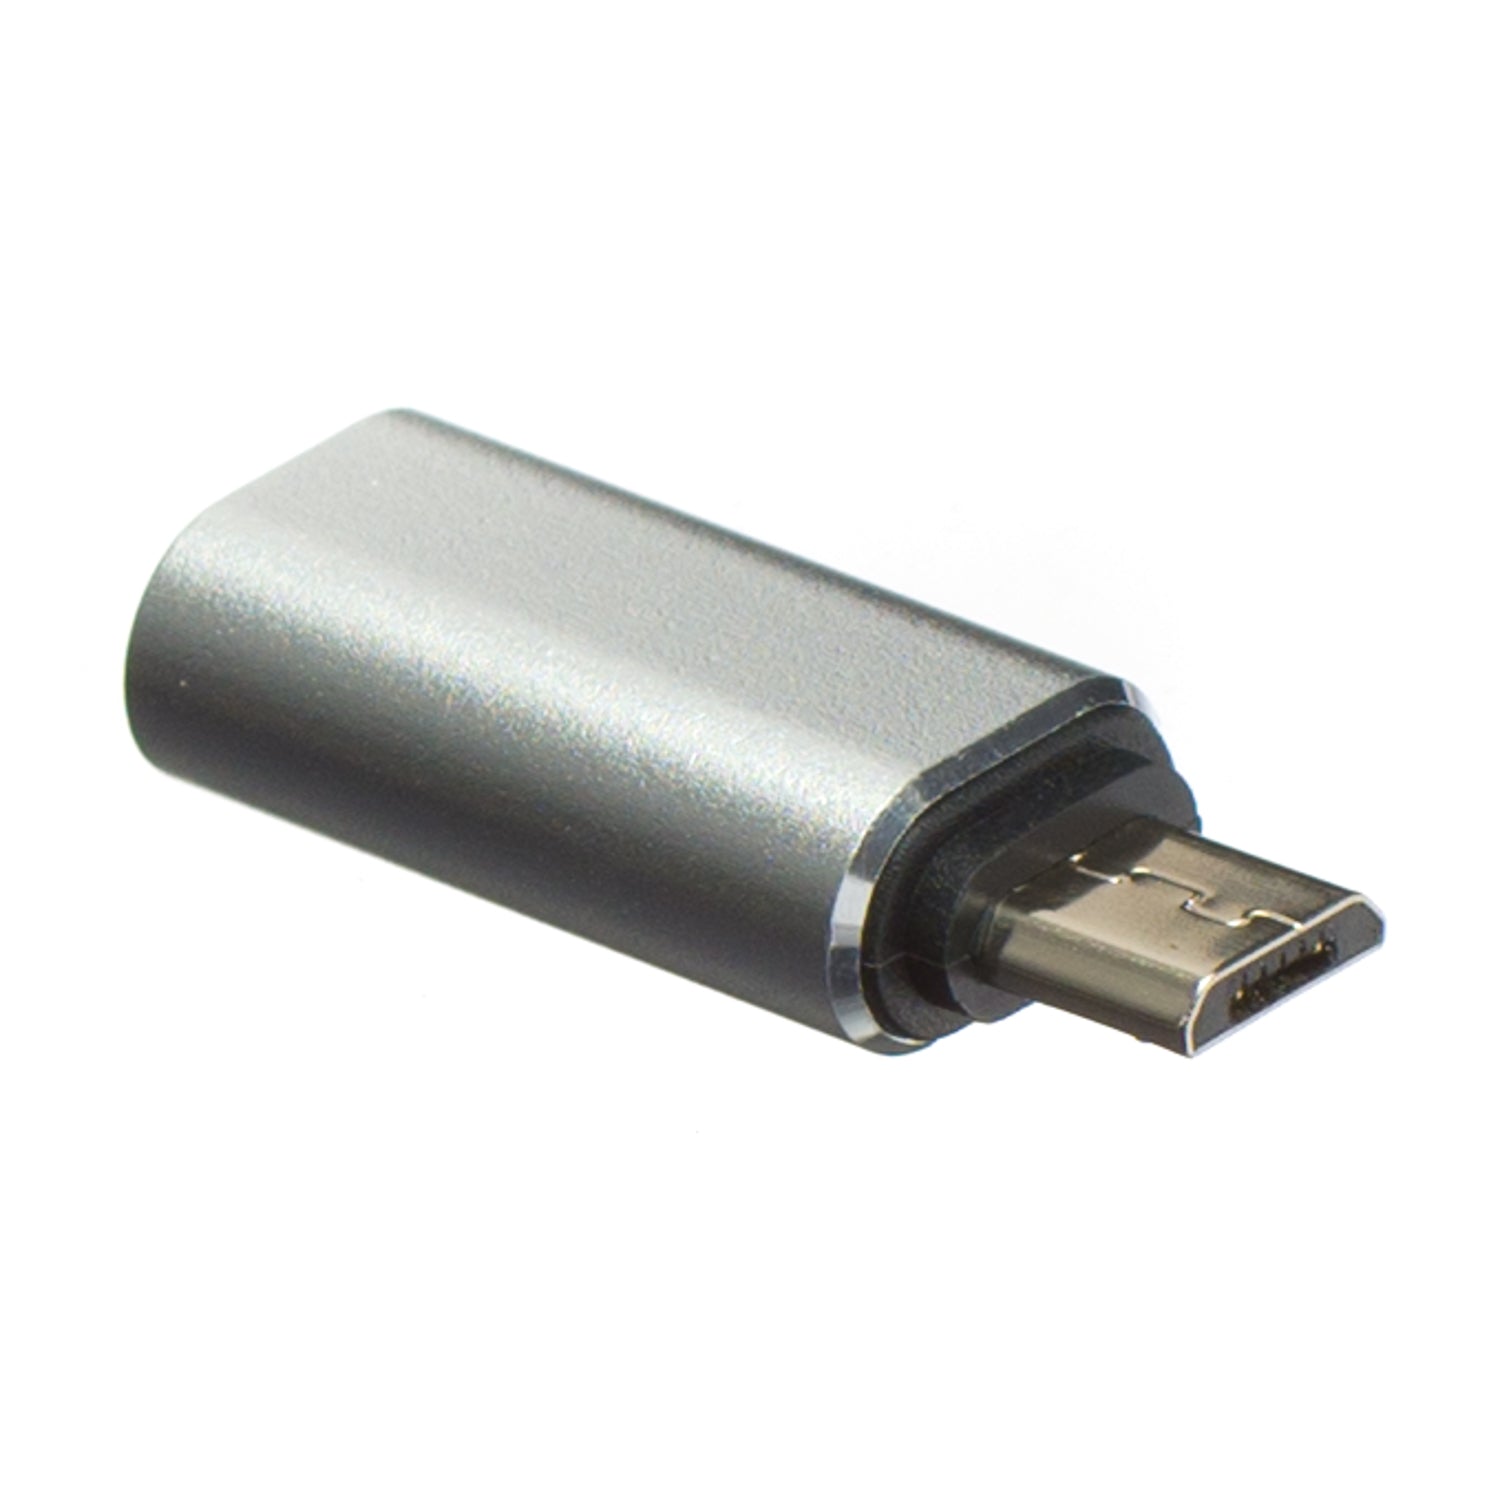 USB-C to MicroUSB Adaptor